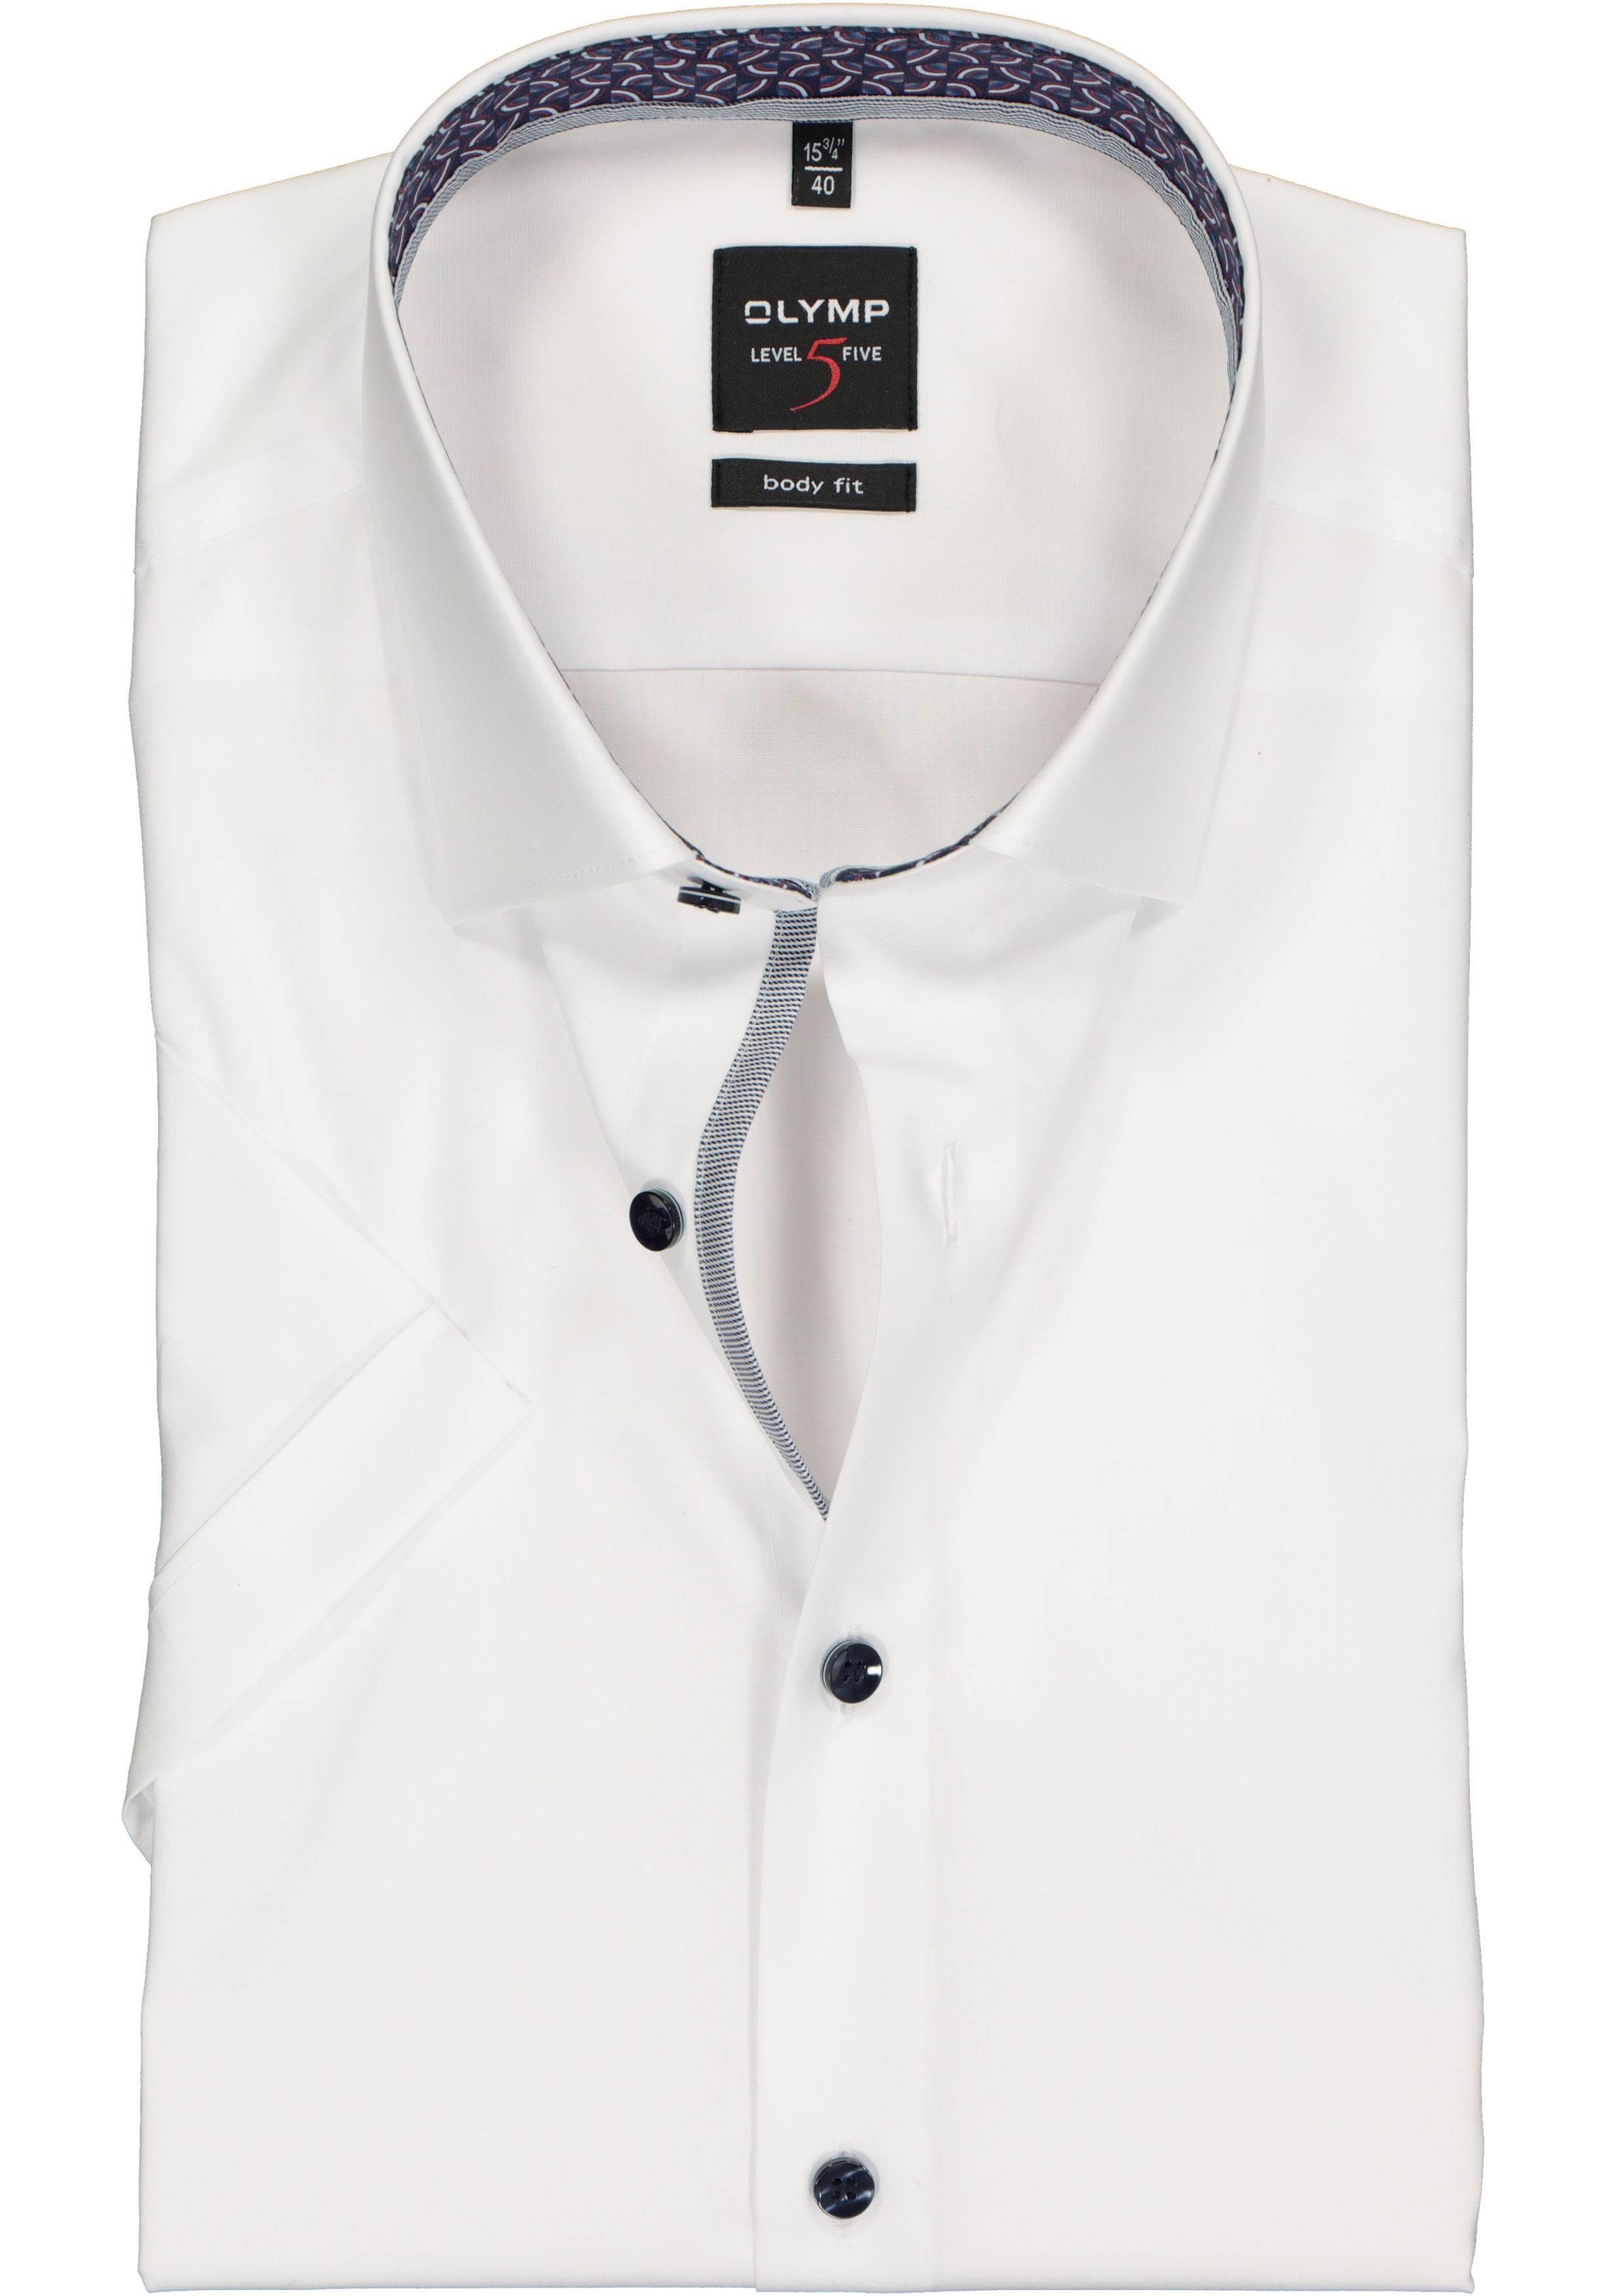 OLYMP Level 5 body fit overhemd, korte mouw, wit poplin (contrast)